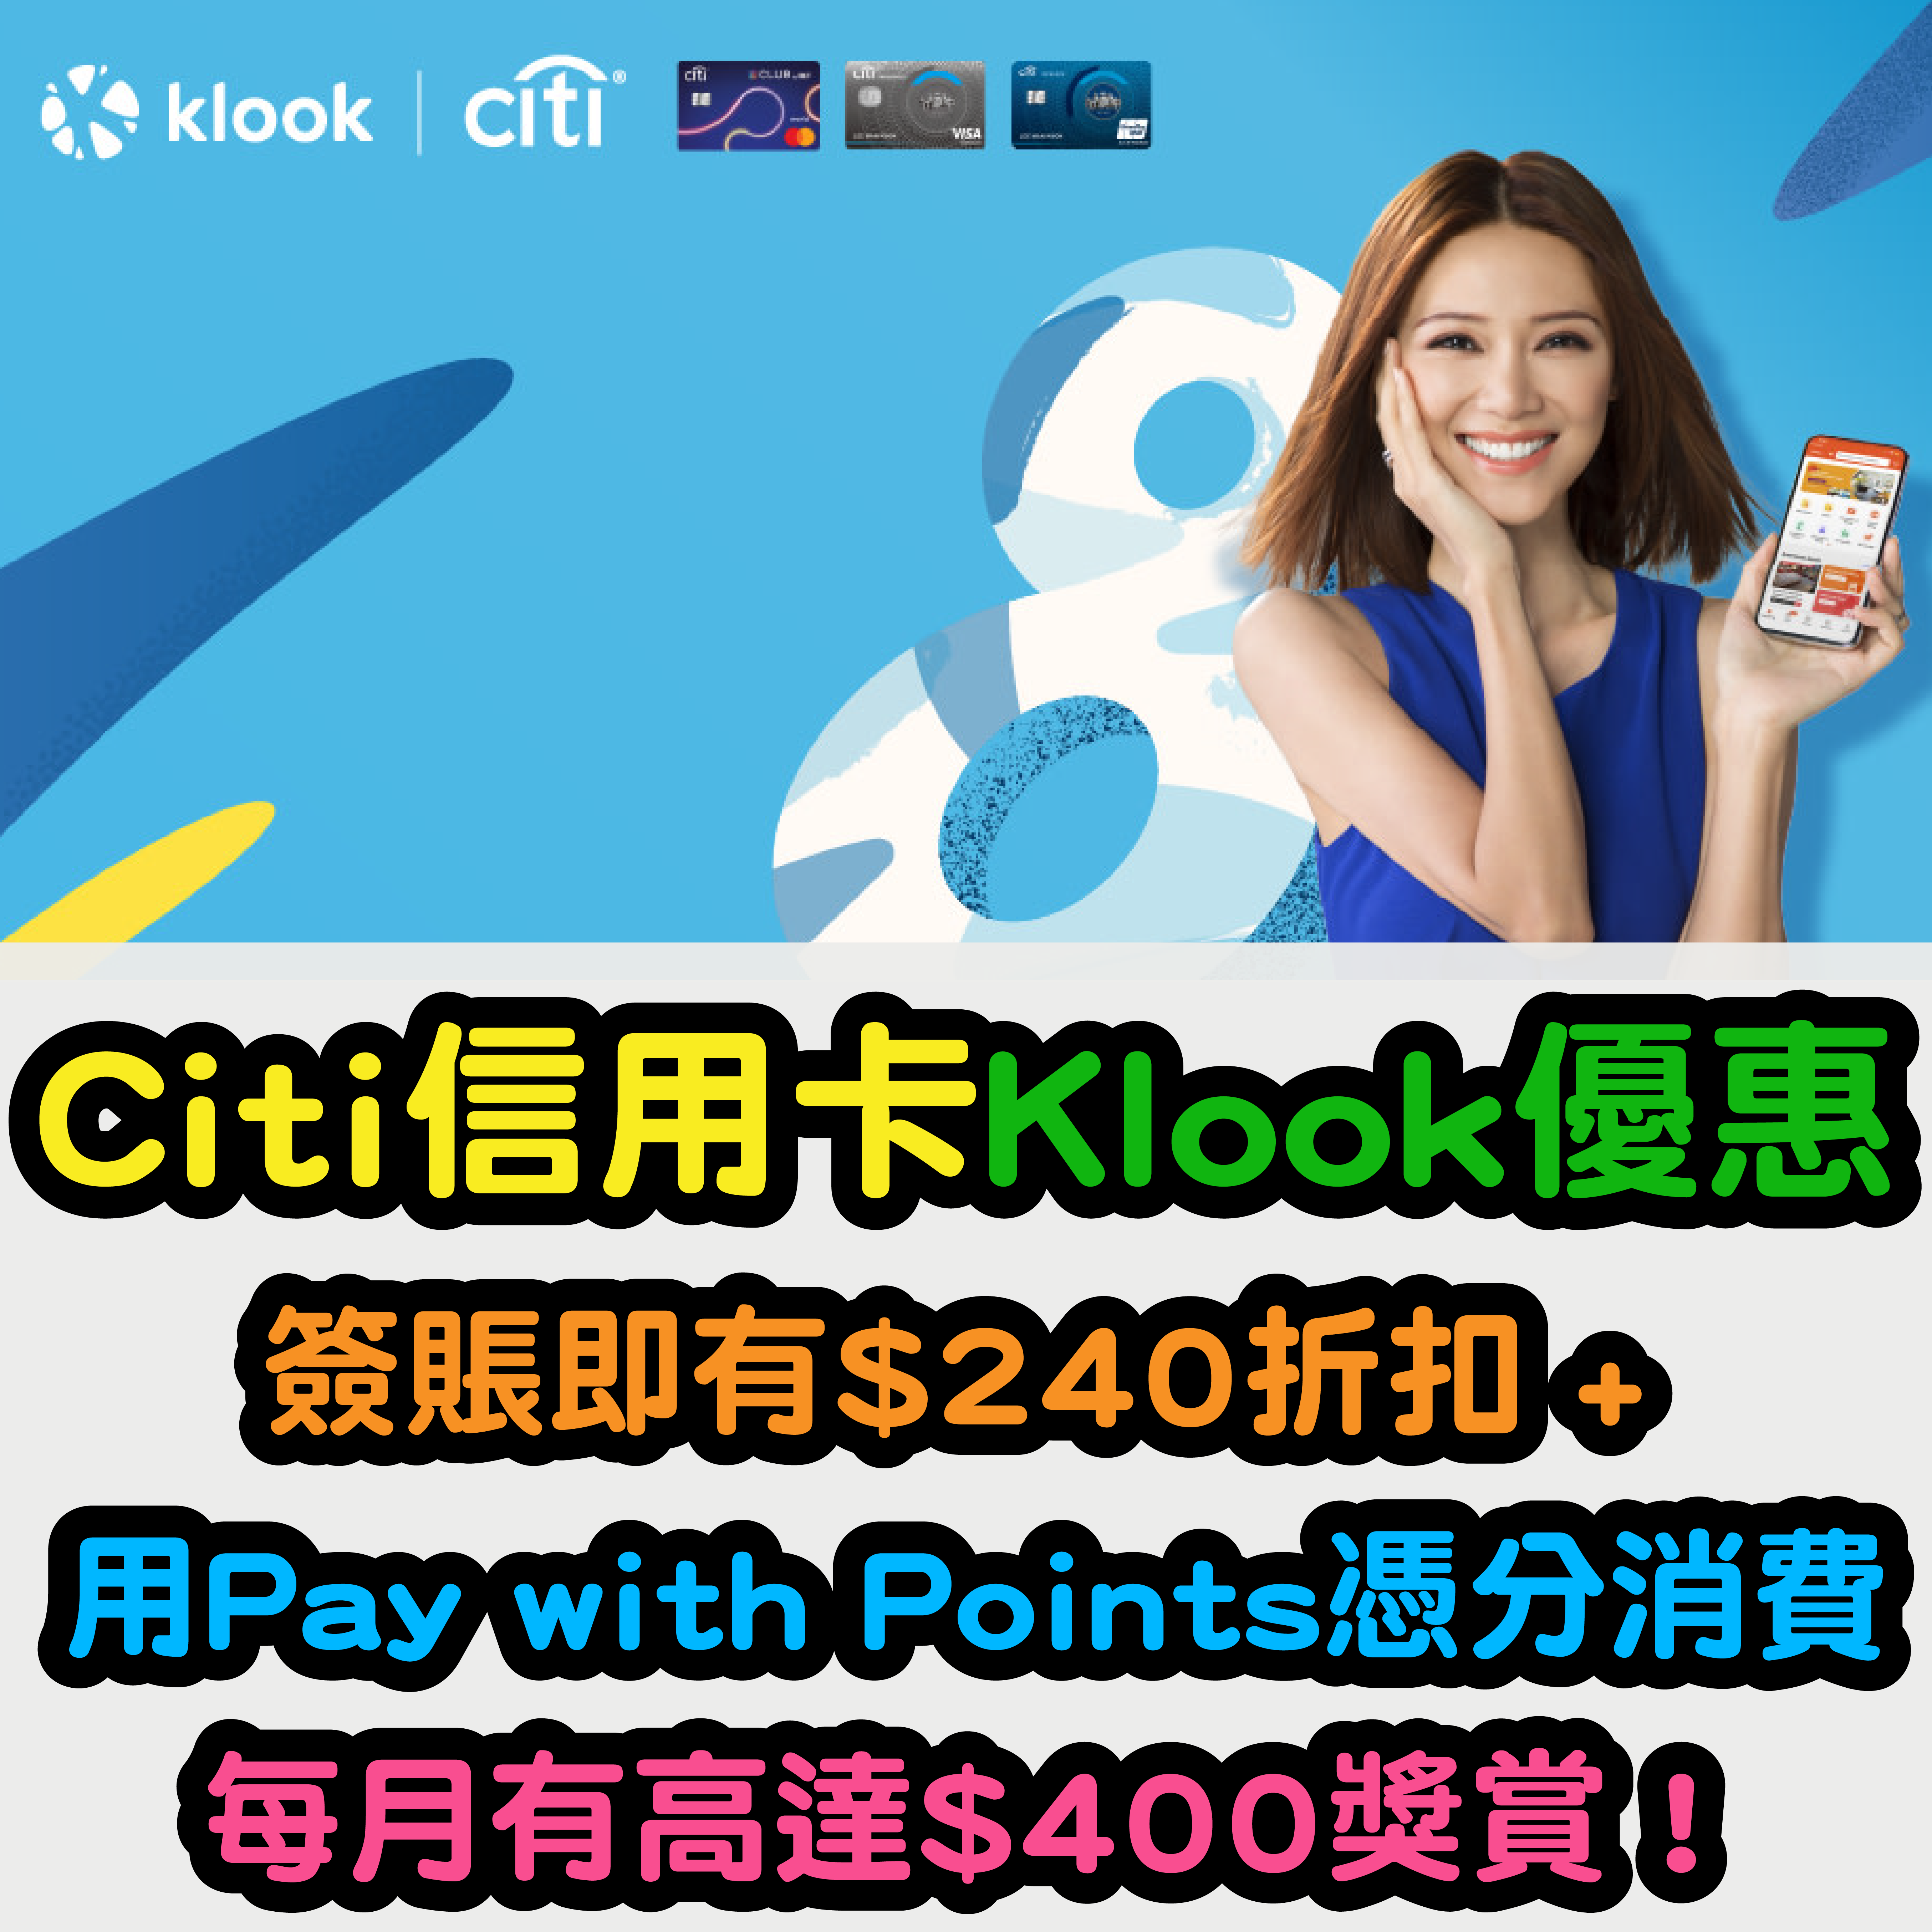 【Citi信用卡Klook優惠】簽賬即有HK$240折扣 + 用Citi Pay with Points憑分消費每月有高達HK$400獎賞！